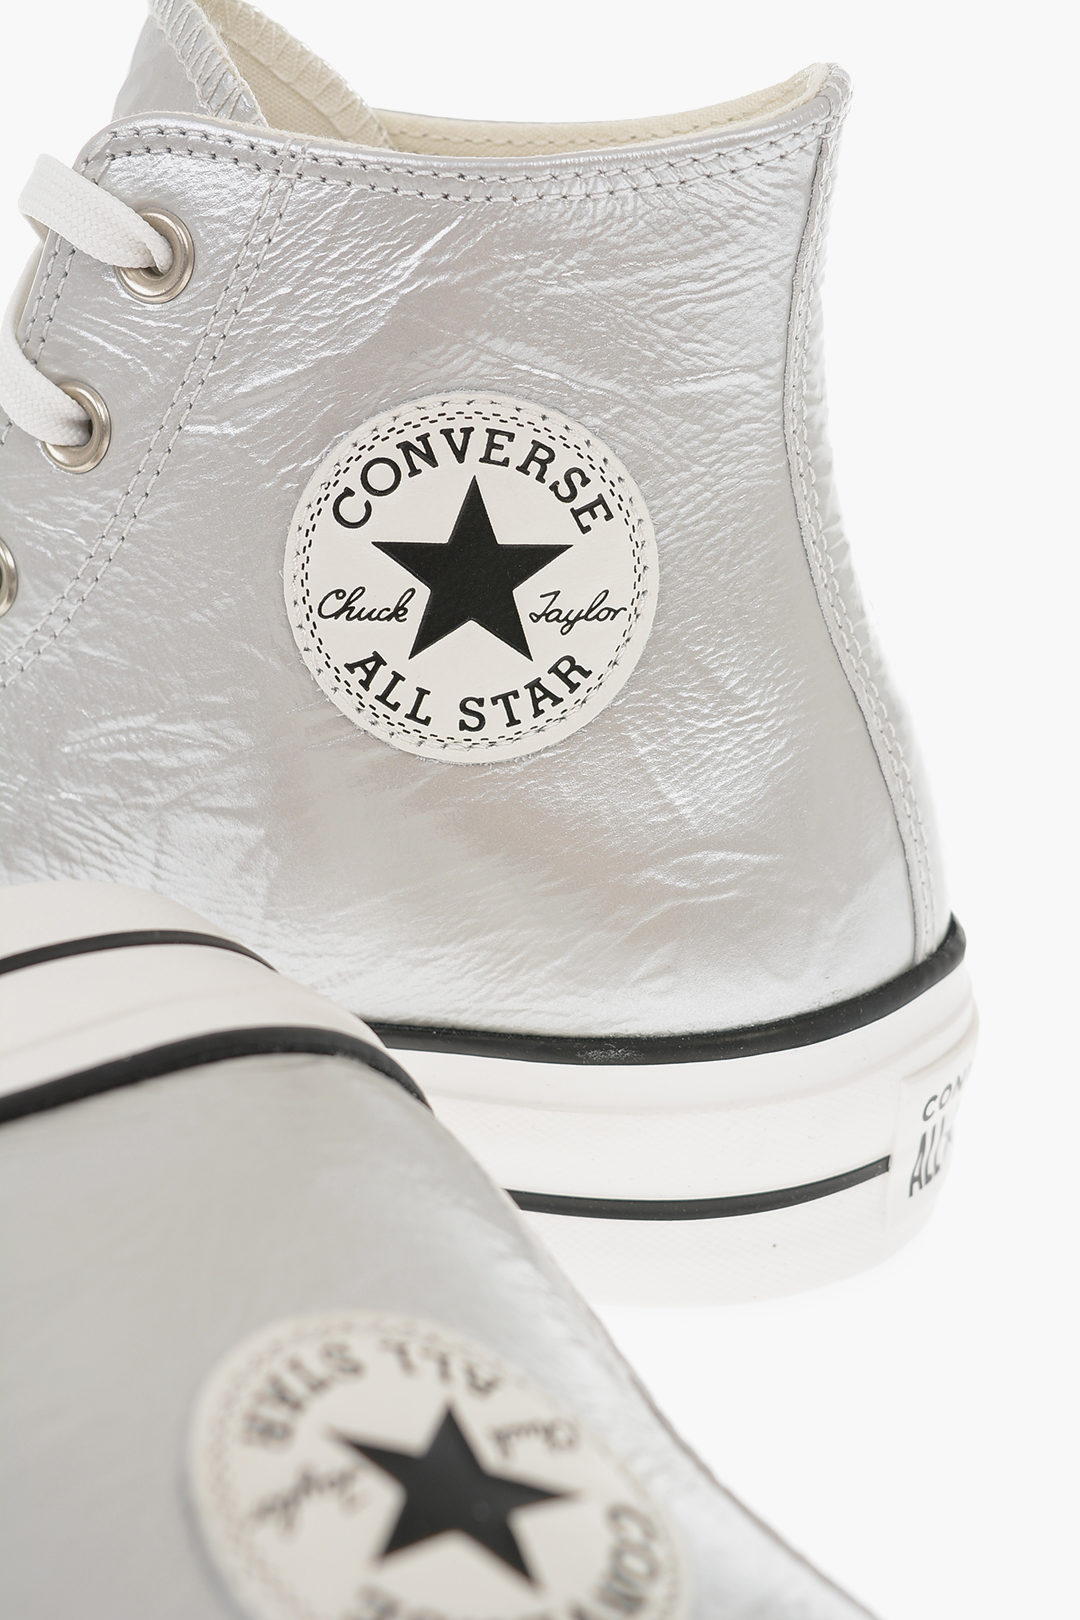 converse chuck taylor all star leather platform